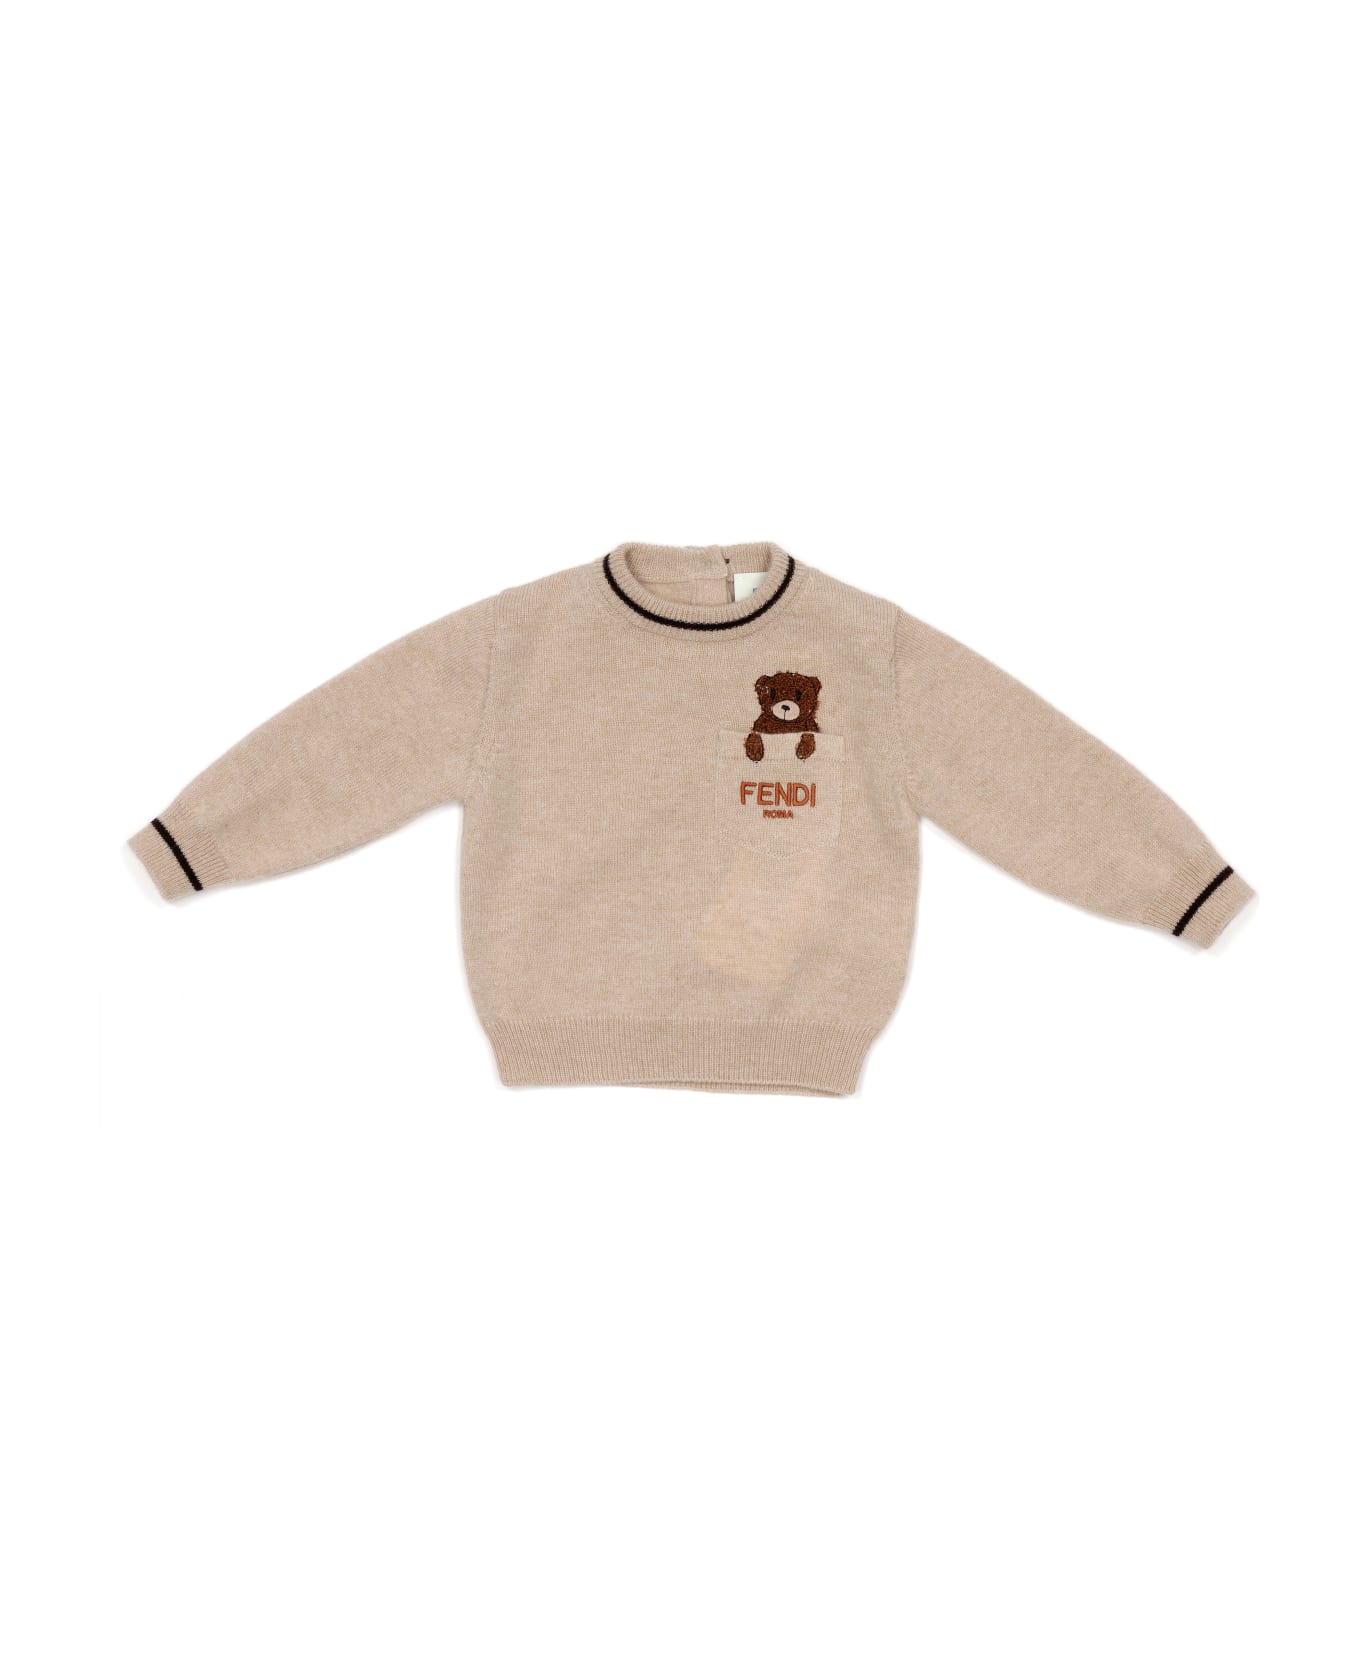 Fendi Crewneck Sweater - BEIGE